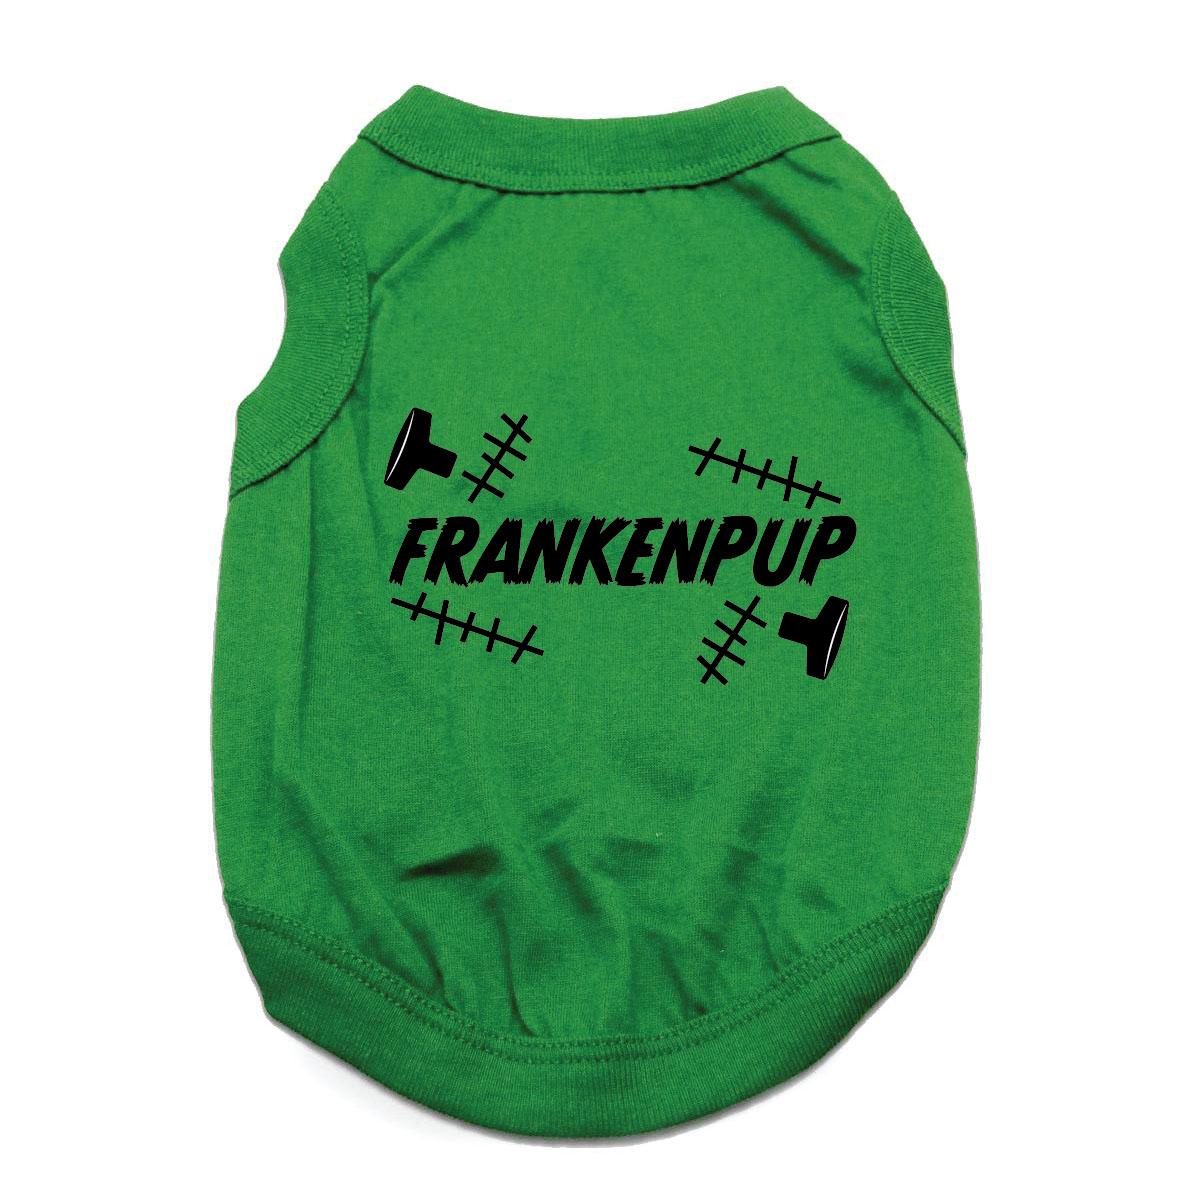 Frankenpup Dog Shirt - Green